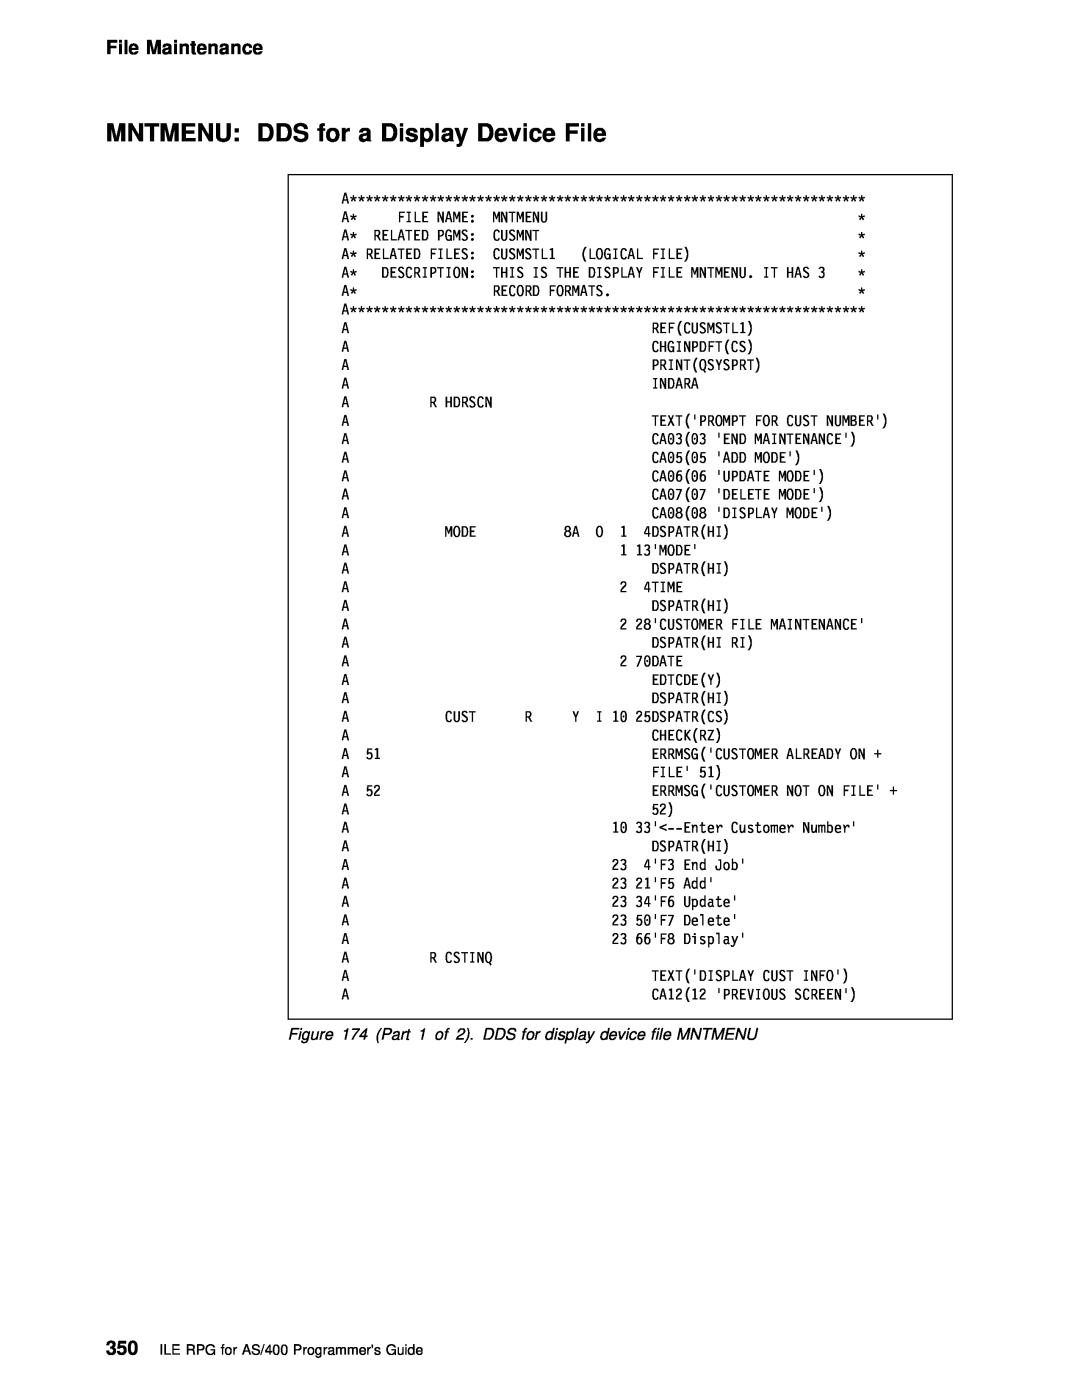 IBM AS/400 manual Display, File Maintenance, Device, Mntmenu Dds 